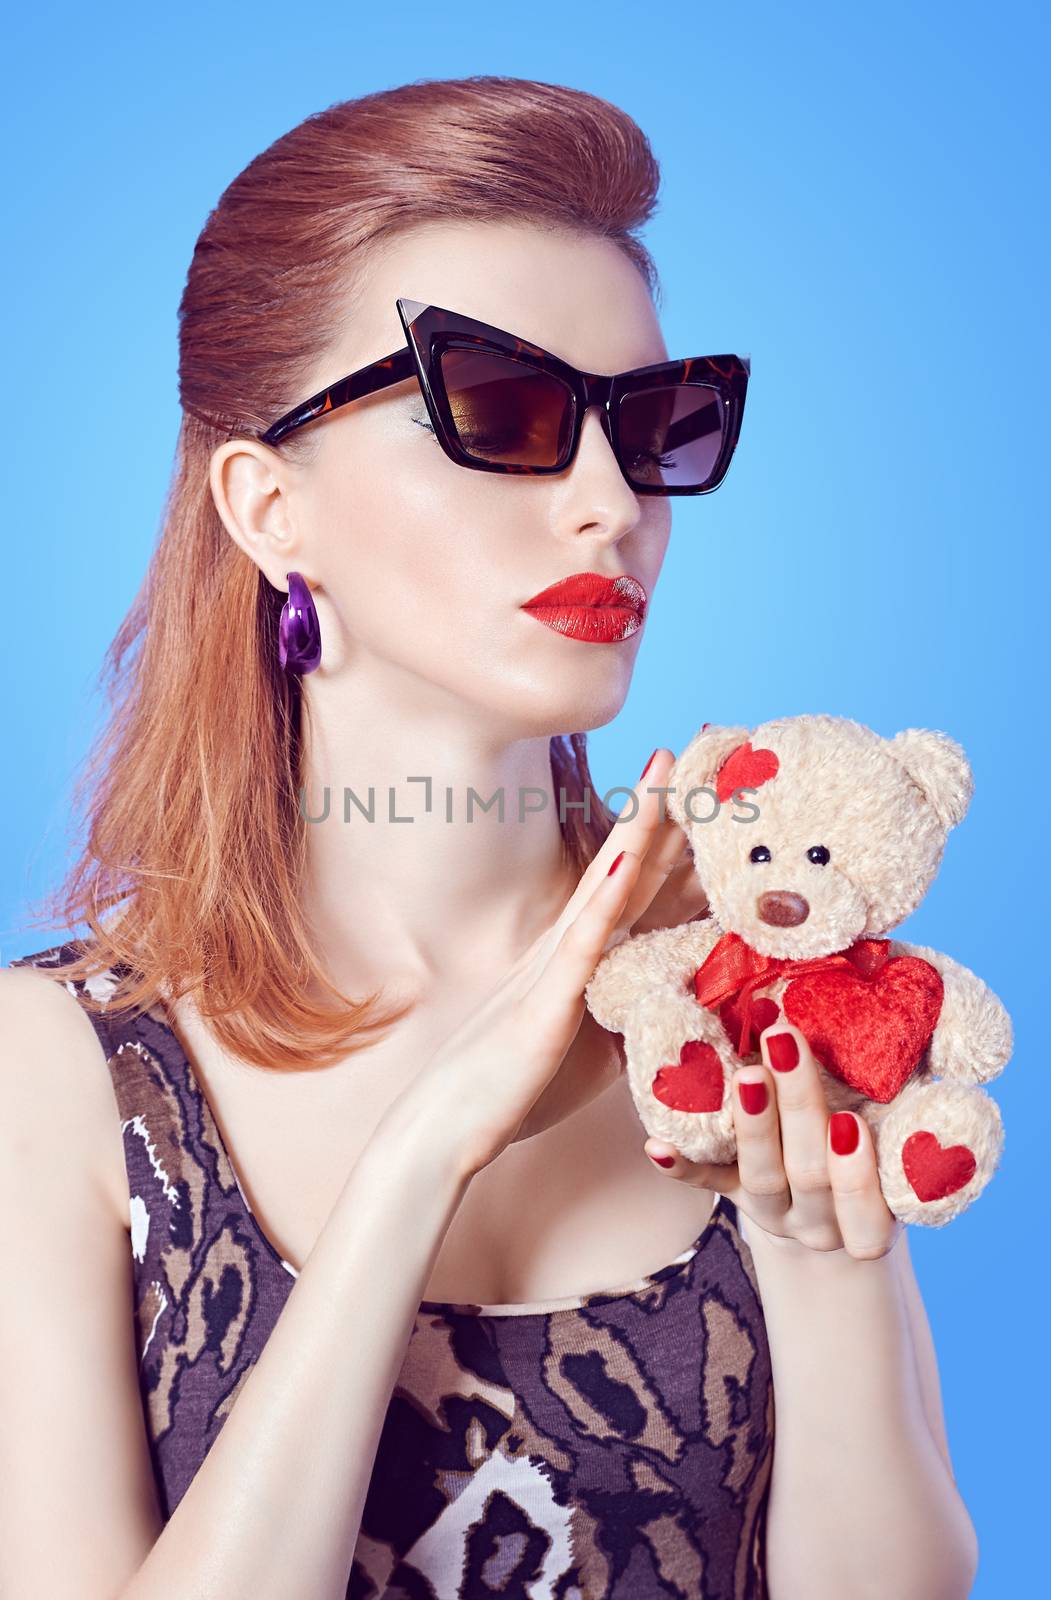 Beauty fashion redhead woman and loving teddy bear by 918